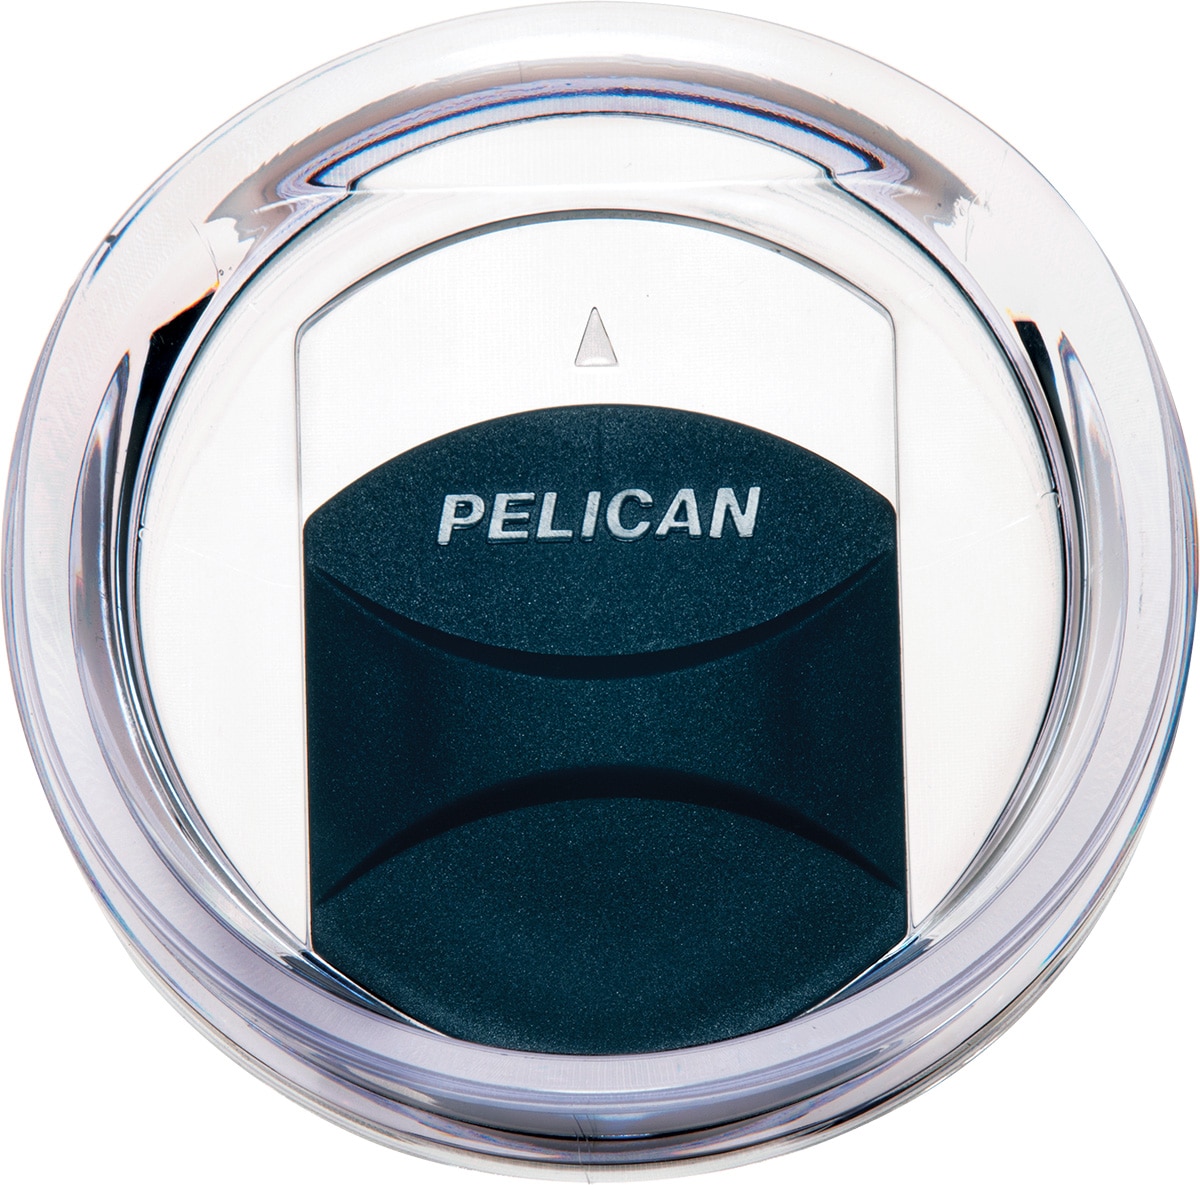 https://www.pocomarine.com/wp-content/uploads/2018/12/pelican-slide-lid-travel-cup-tumbler-traveller.jpg